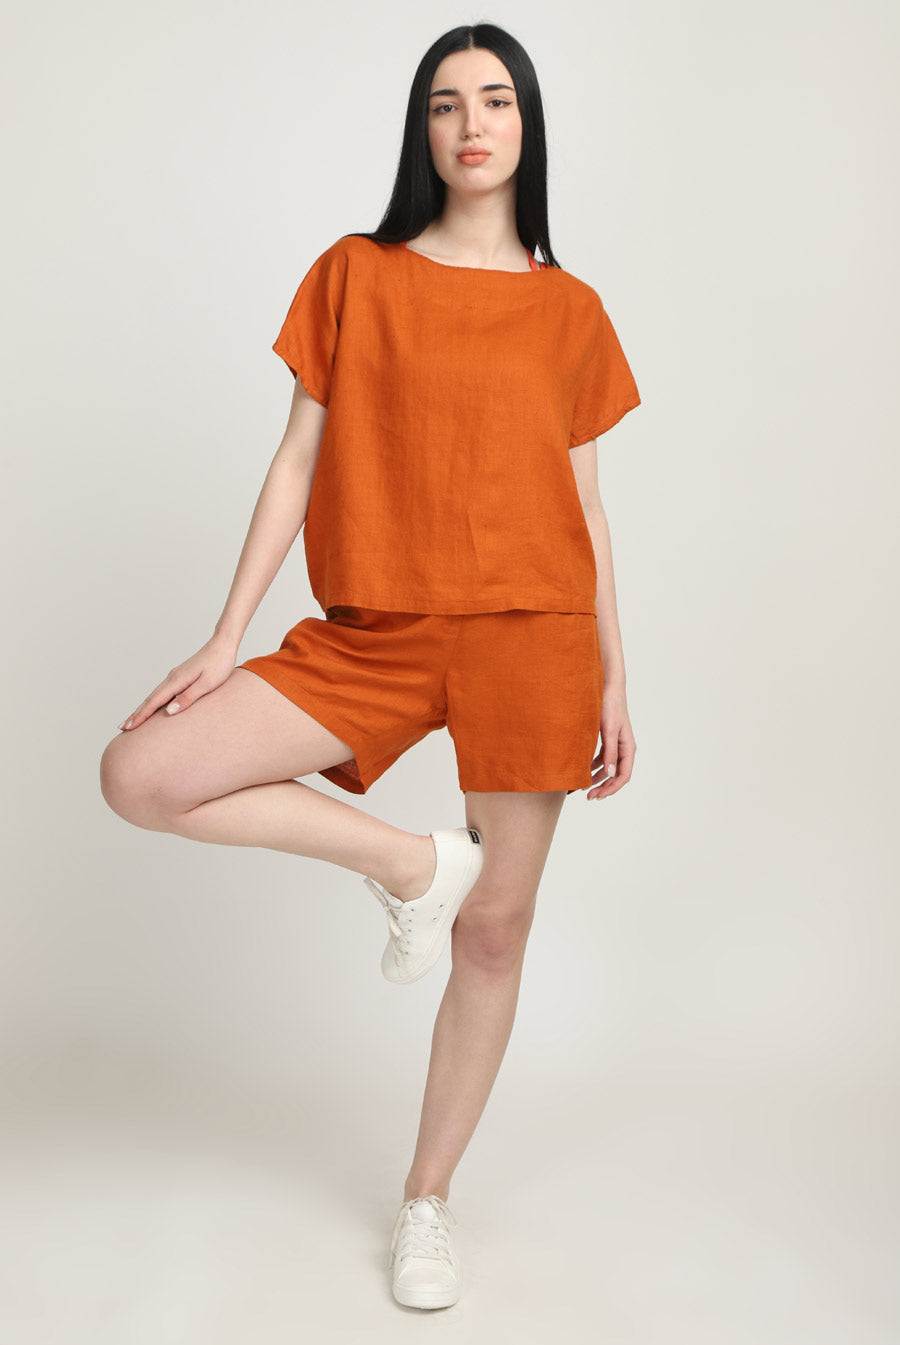 100% Linen Rust Yoga Crop top and Shorts